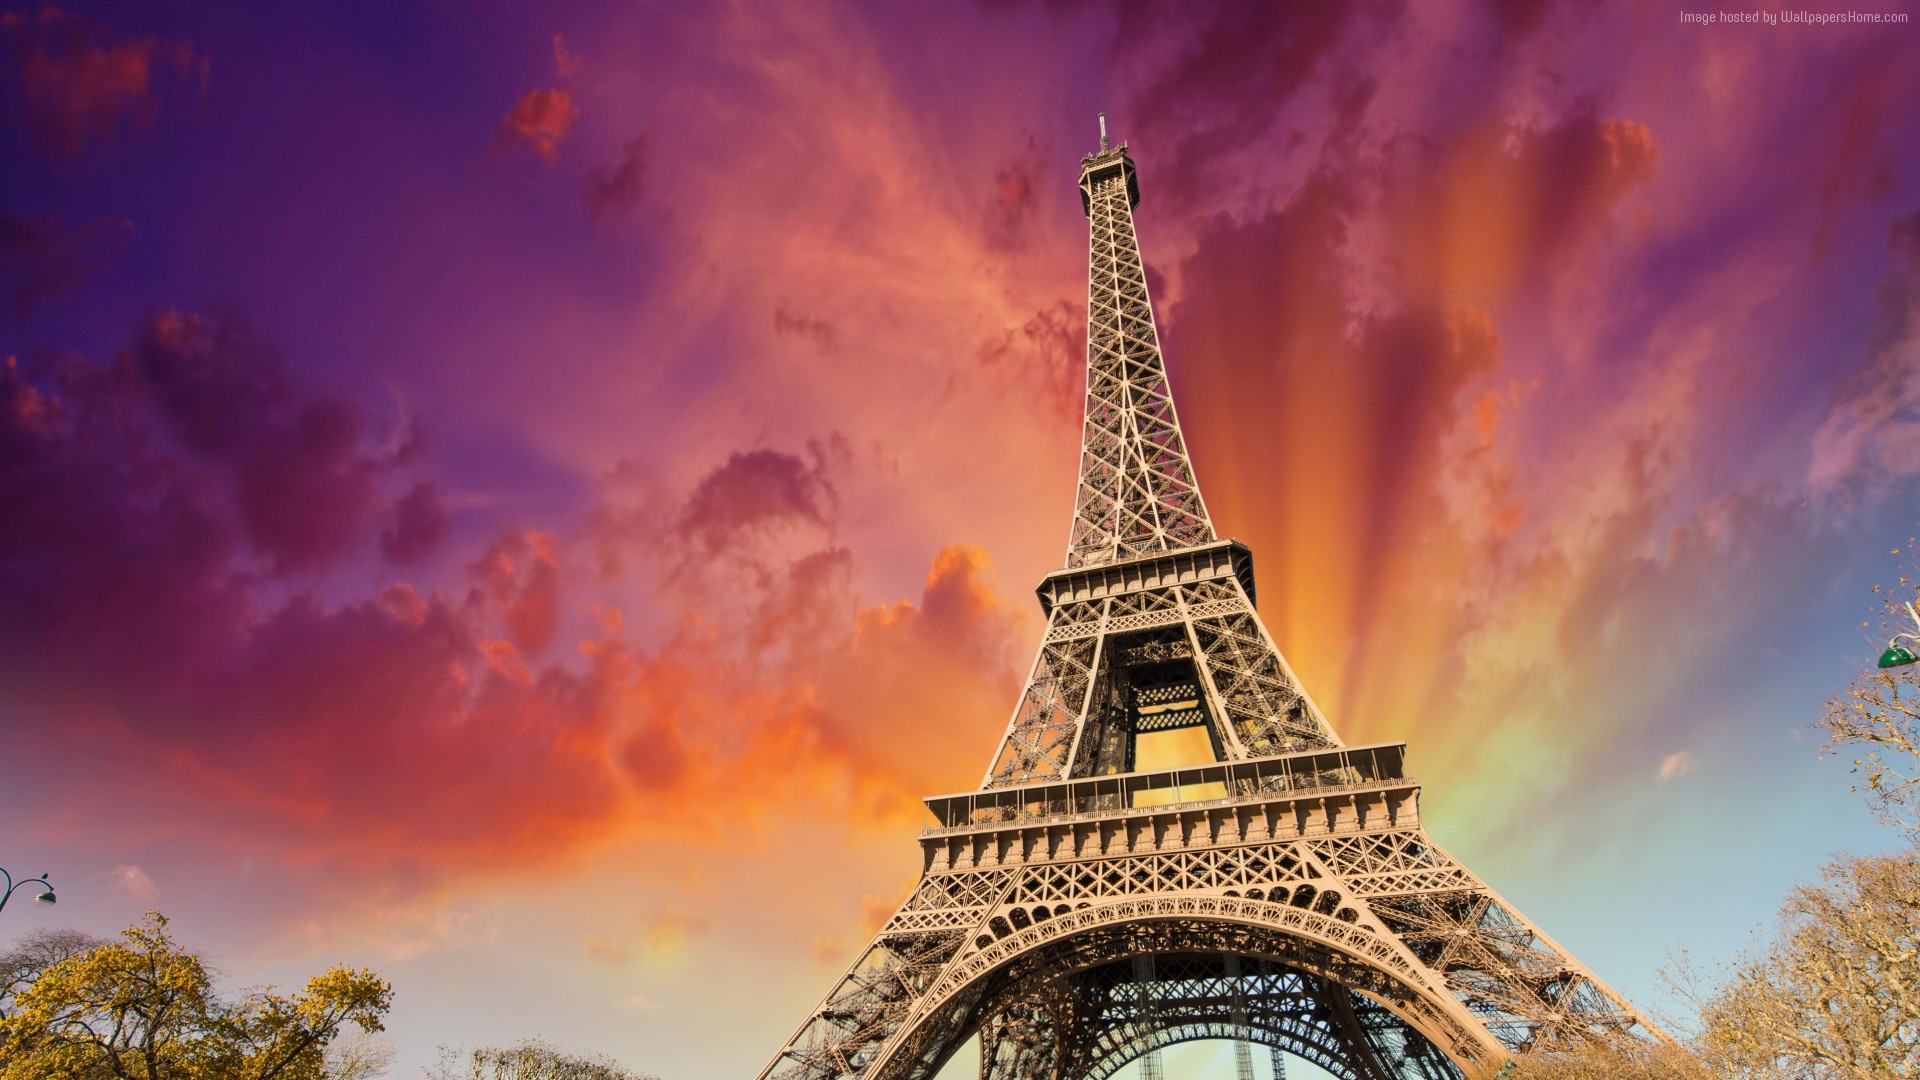 eiffel-tower-1920x1080-paris-france-tourism-travel-5094.jpg